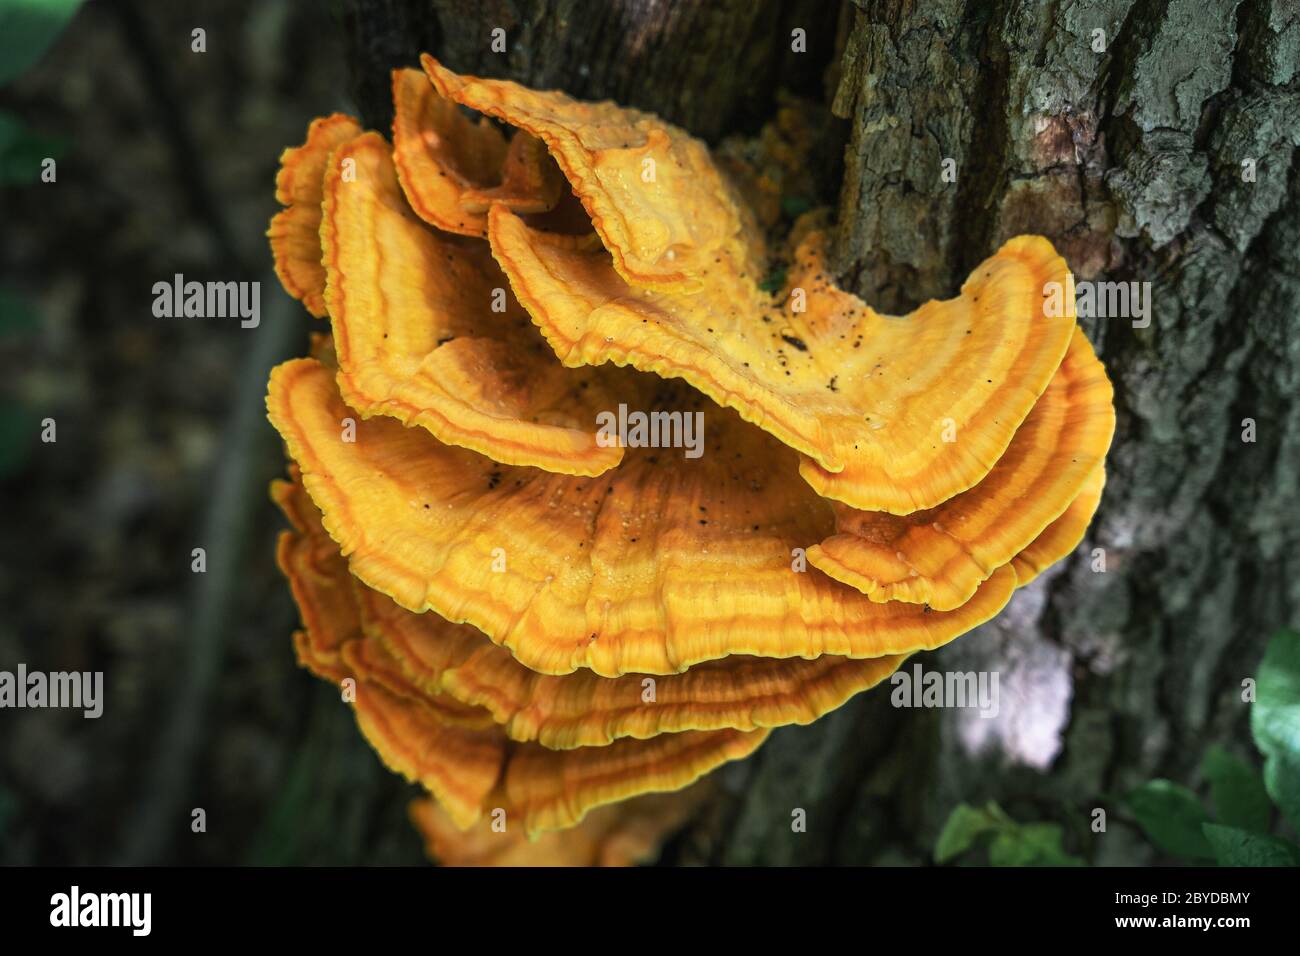 Tinder fungus sulfur-yellow or Laetiporus sulphureus - fungus-tinder fungi family Polyporaceae growing on trees. Stock Photo